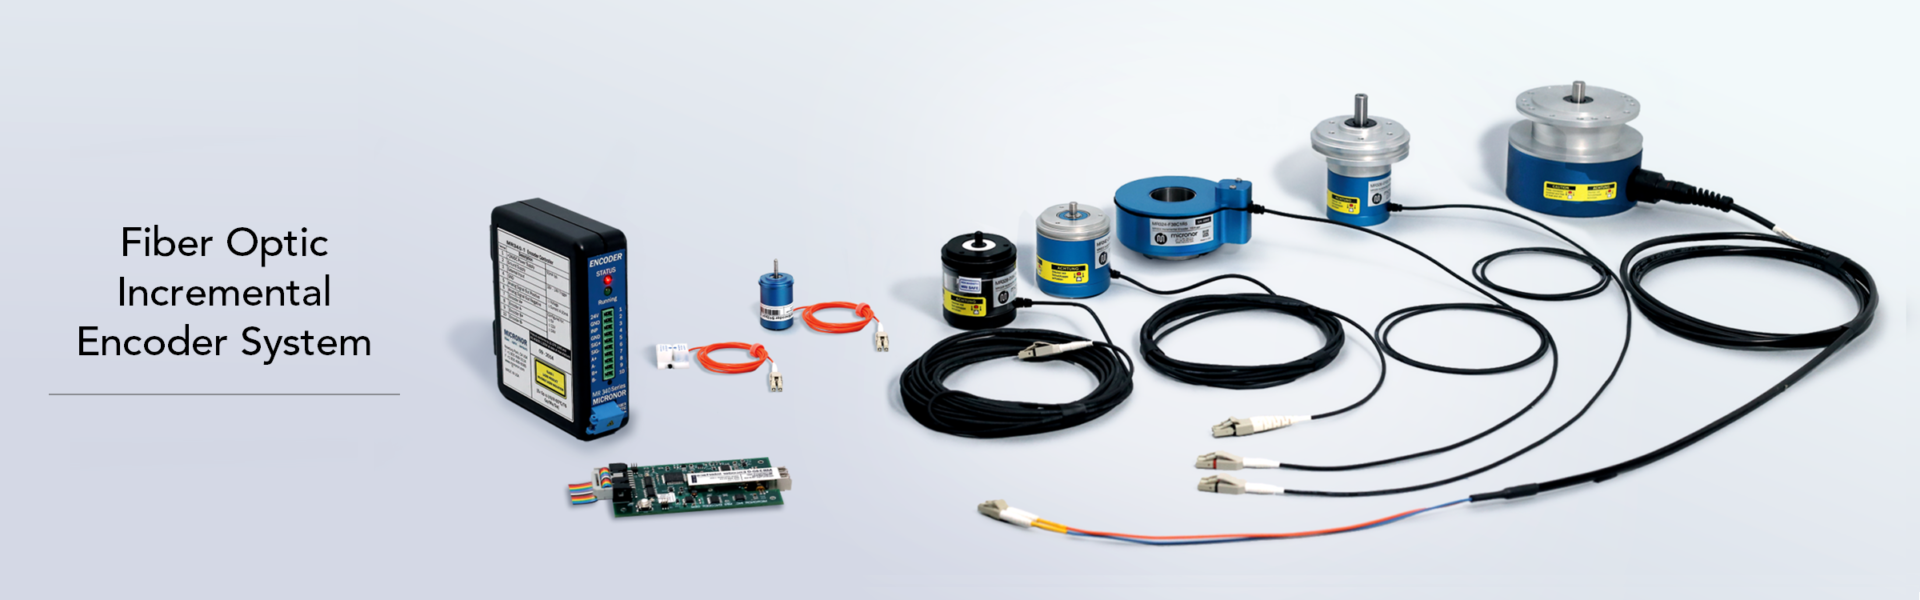 MR340 Series Fiber Optic Incremental Encoder System